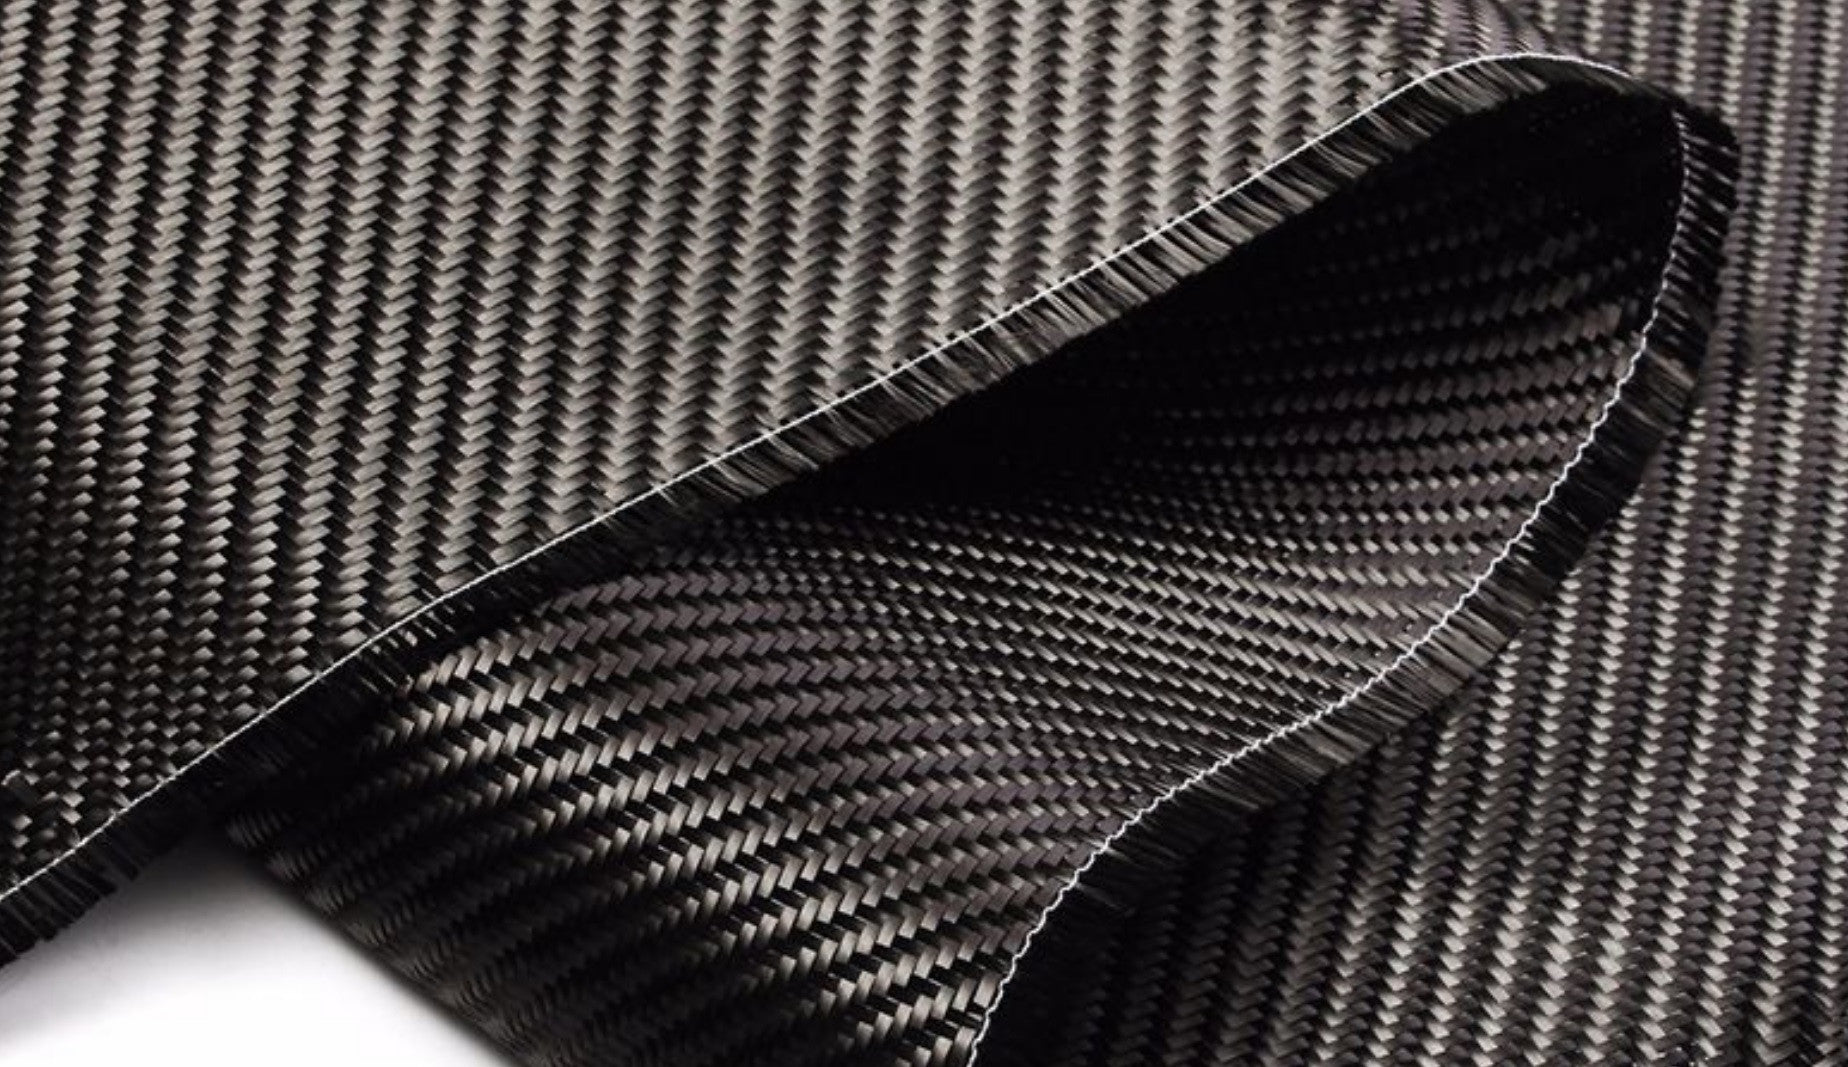 Example of carbon fiber fabric